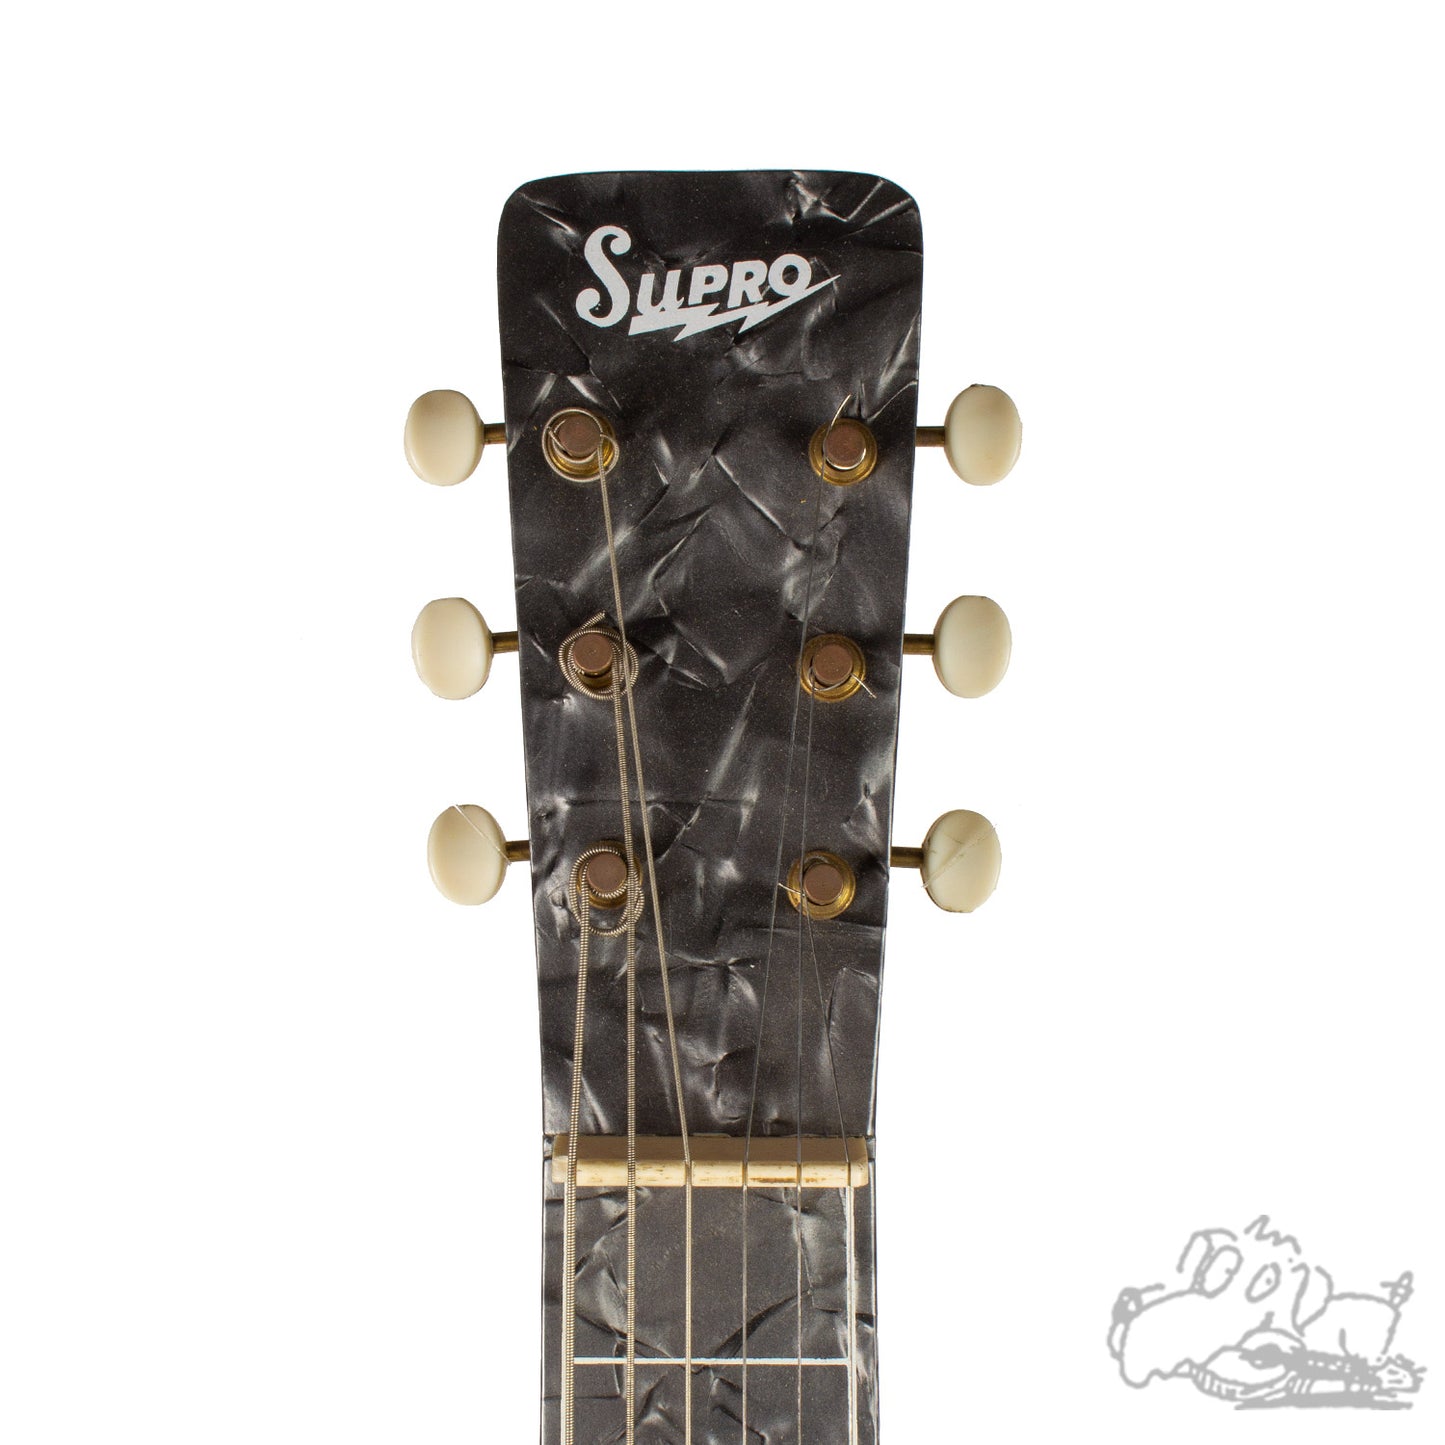 1959 Supro Lap Steel Guitar